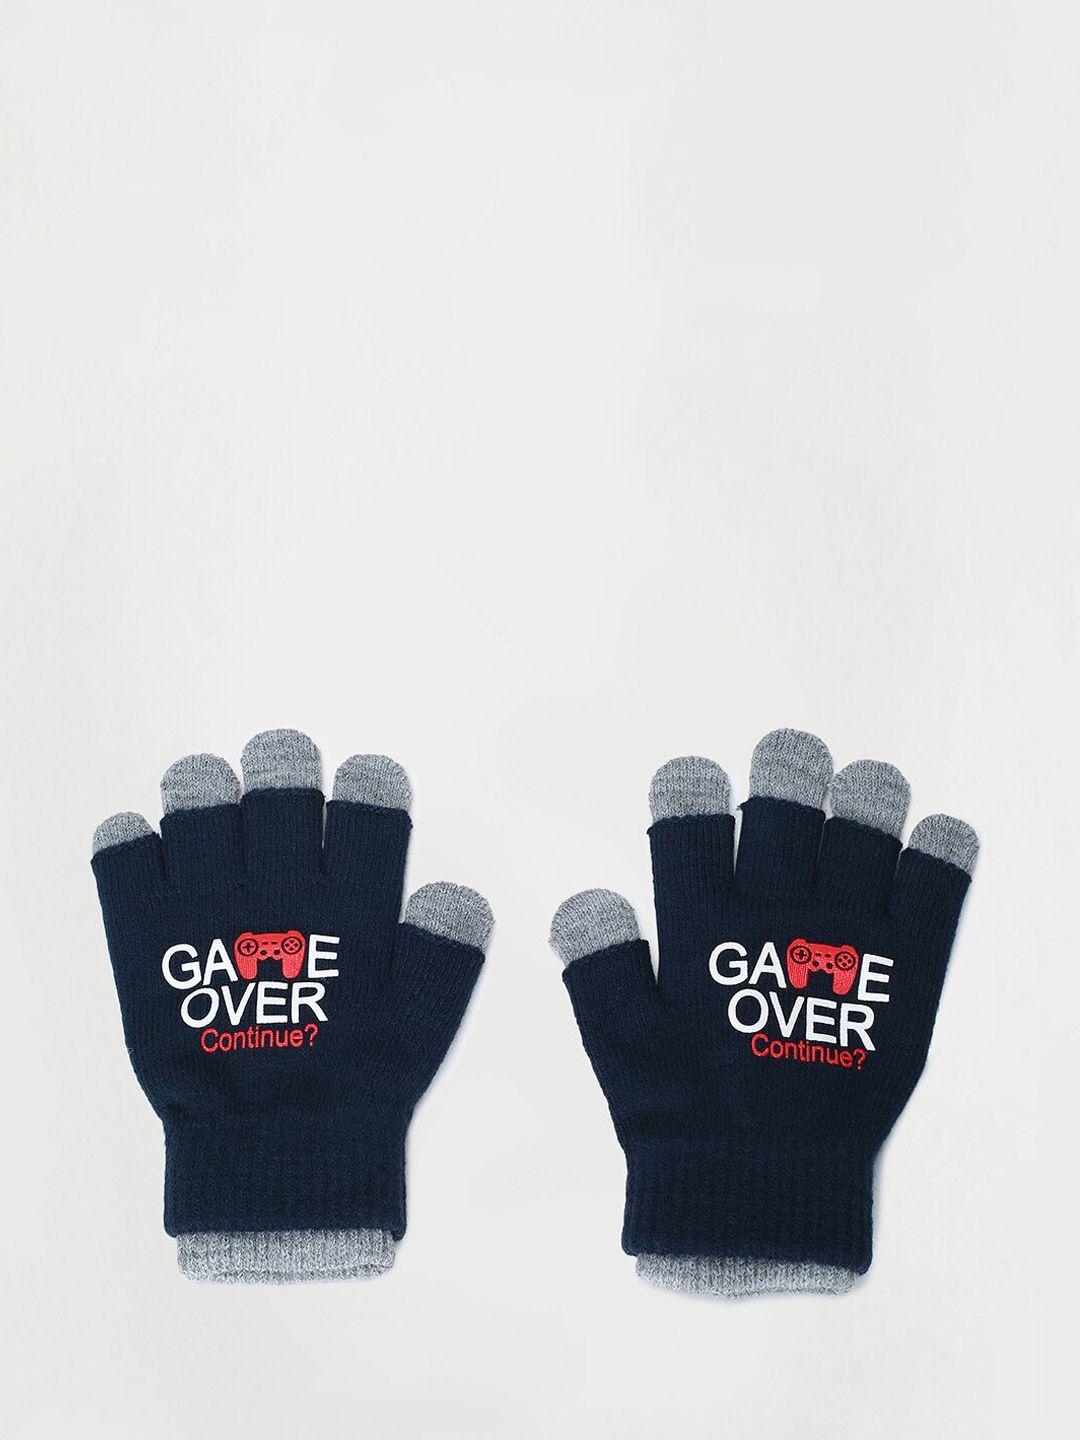 max-women-printed-winter-gloves